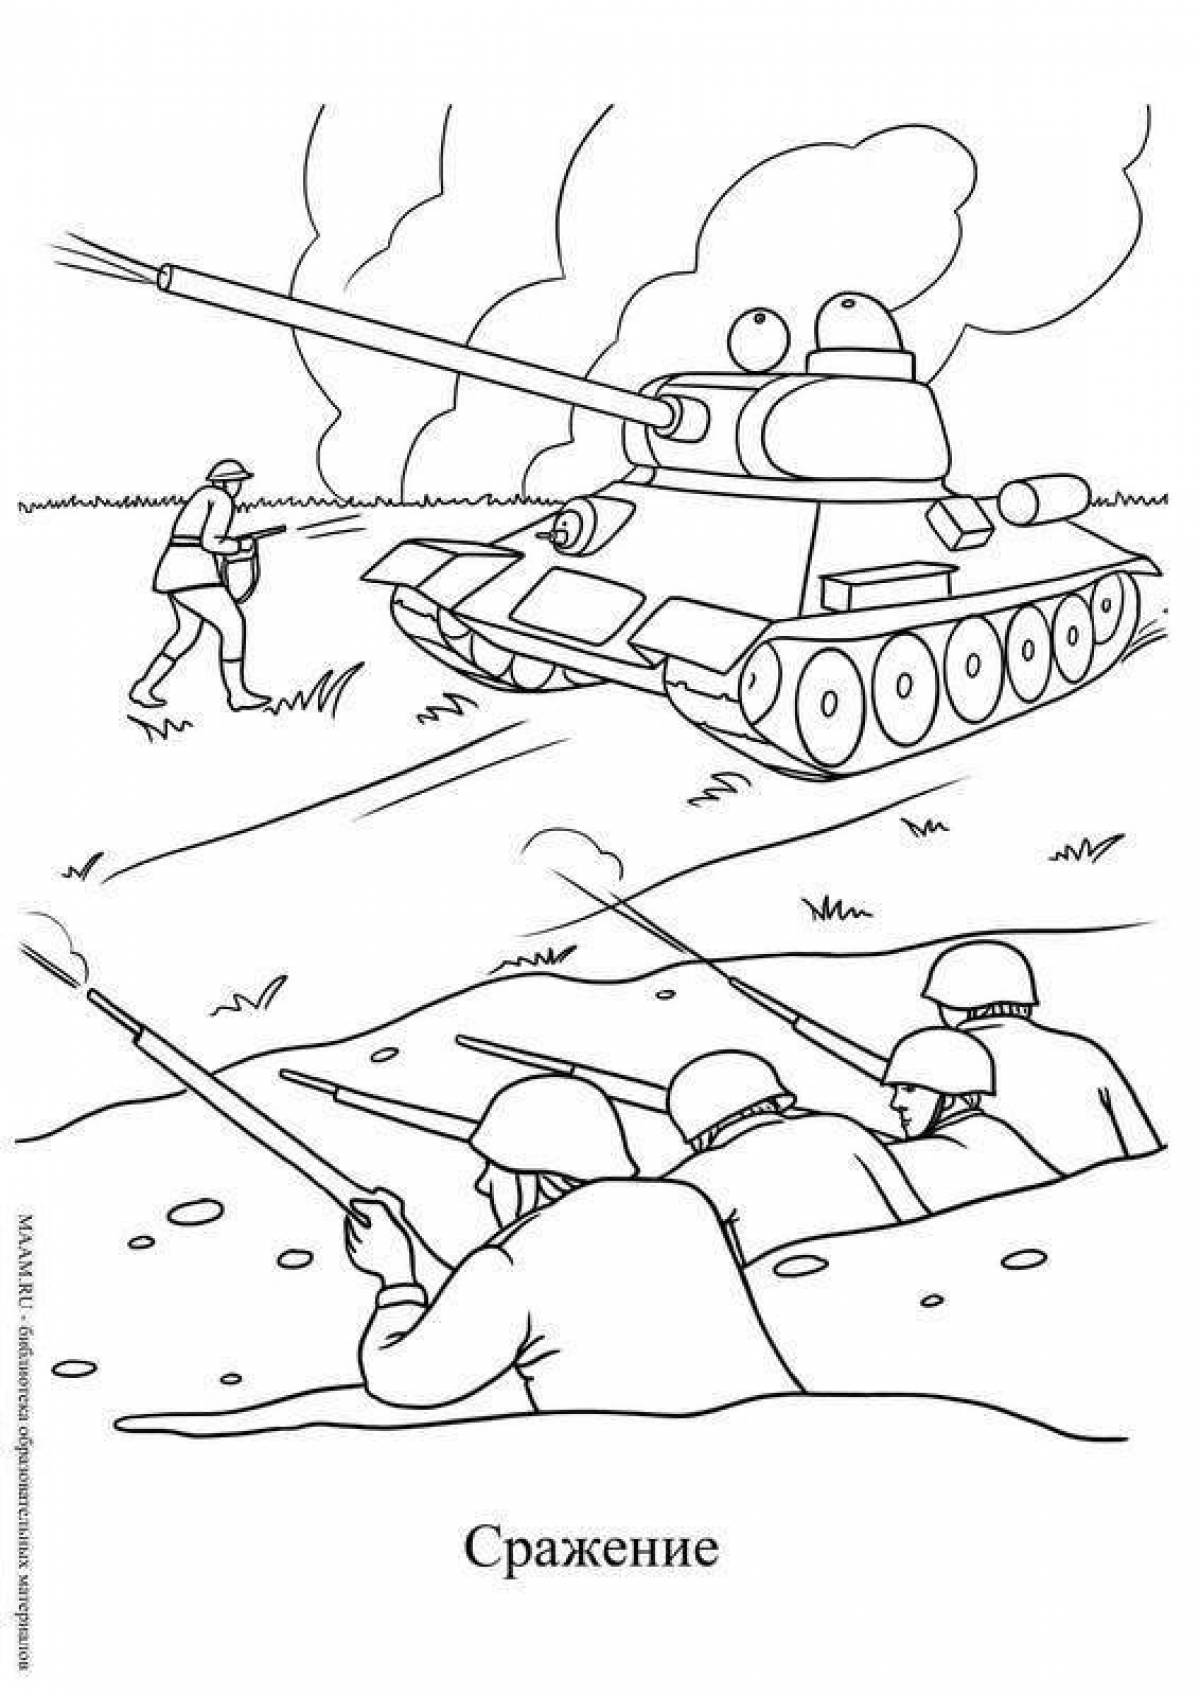 Tense battle of Stalingrad February 2 coloring